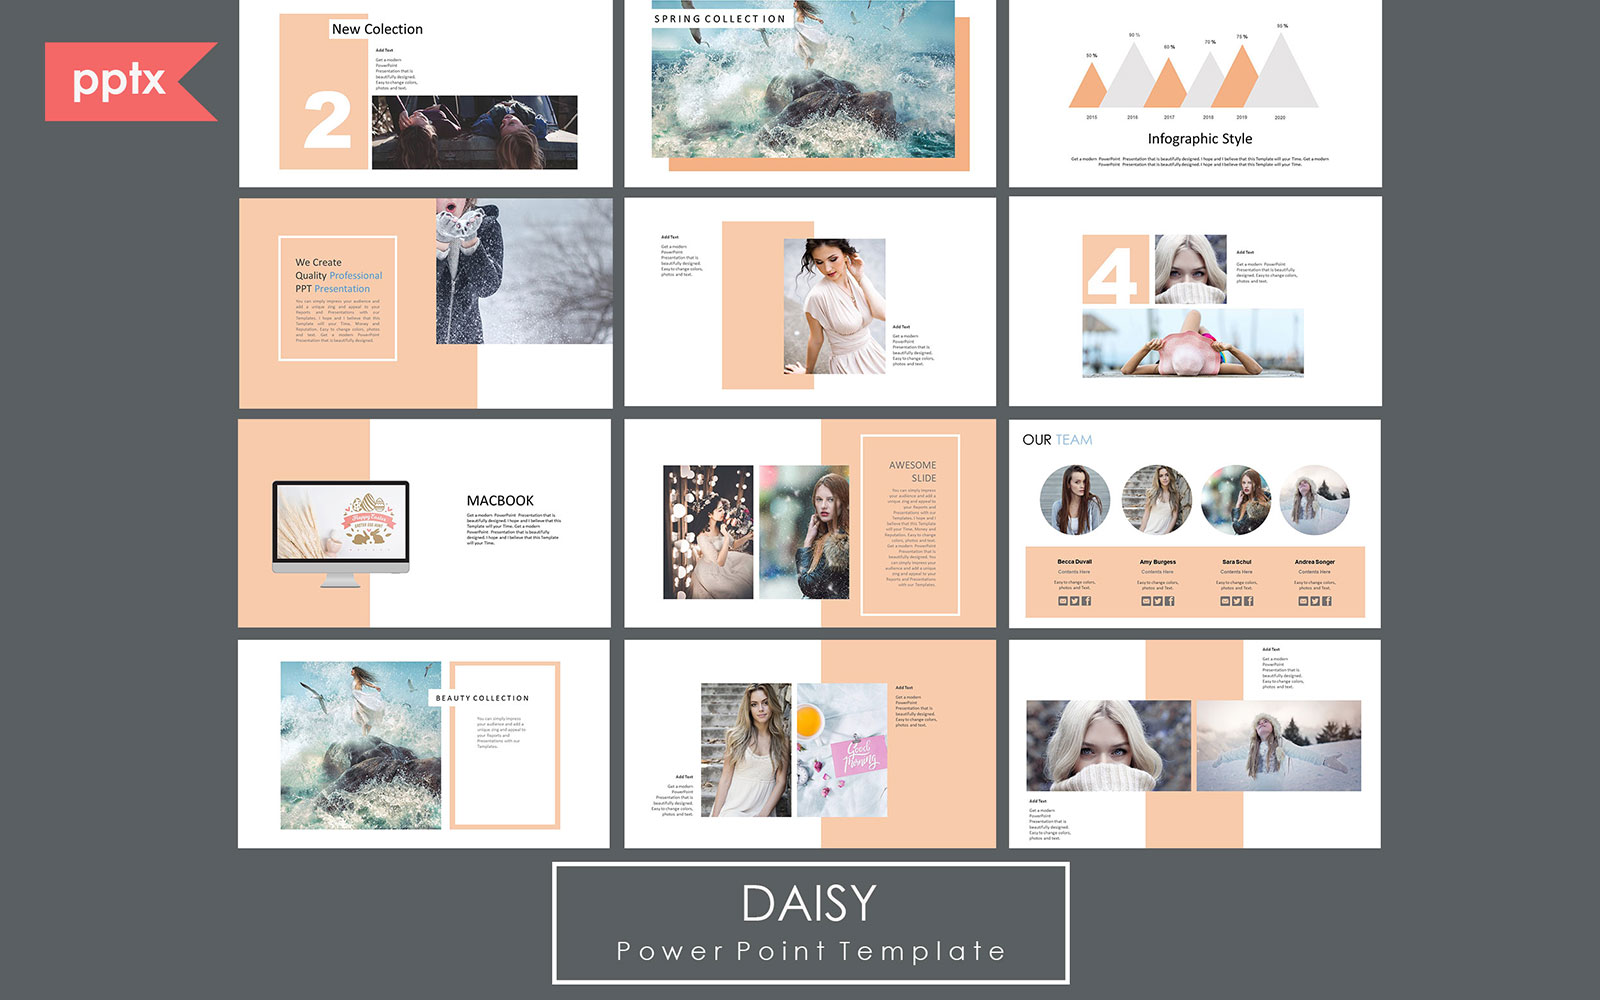 Daisy - PowerPoint Template